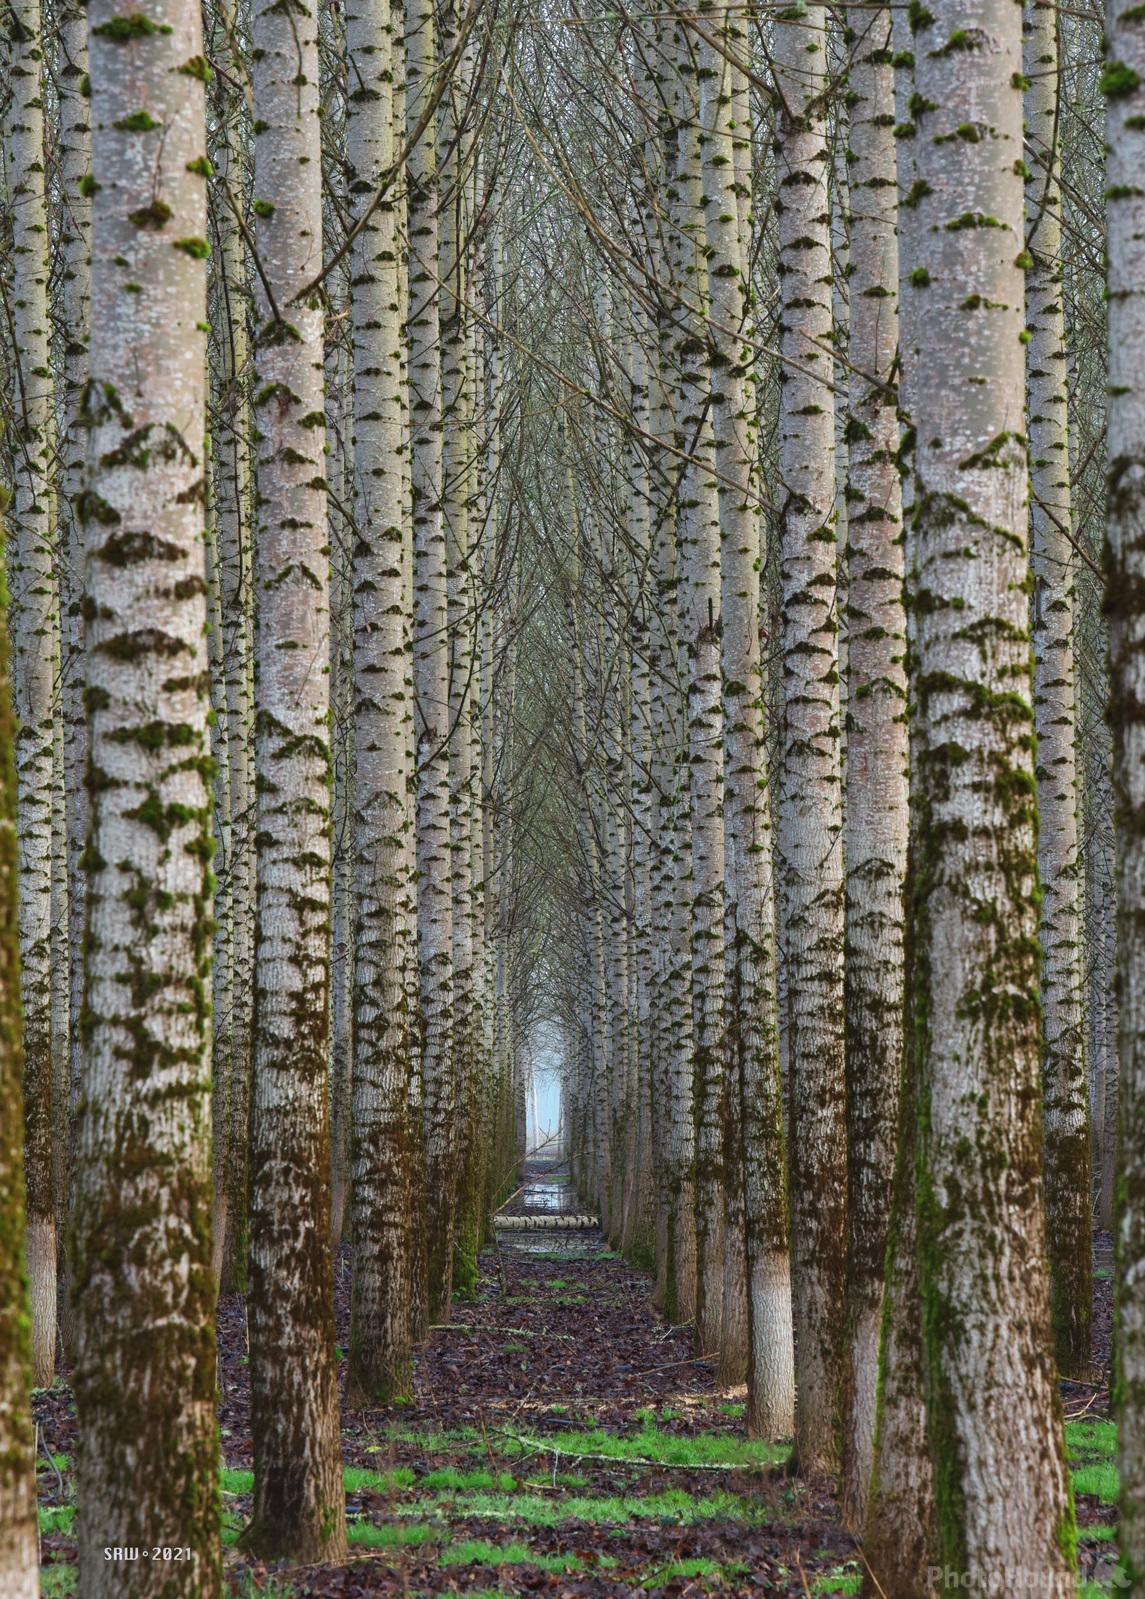 Image of Chehalis Poplar Plantation by Sheldon White